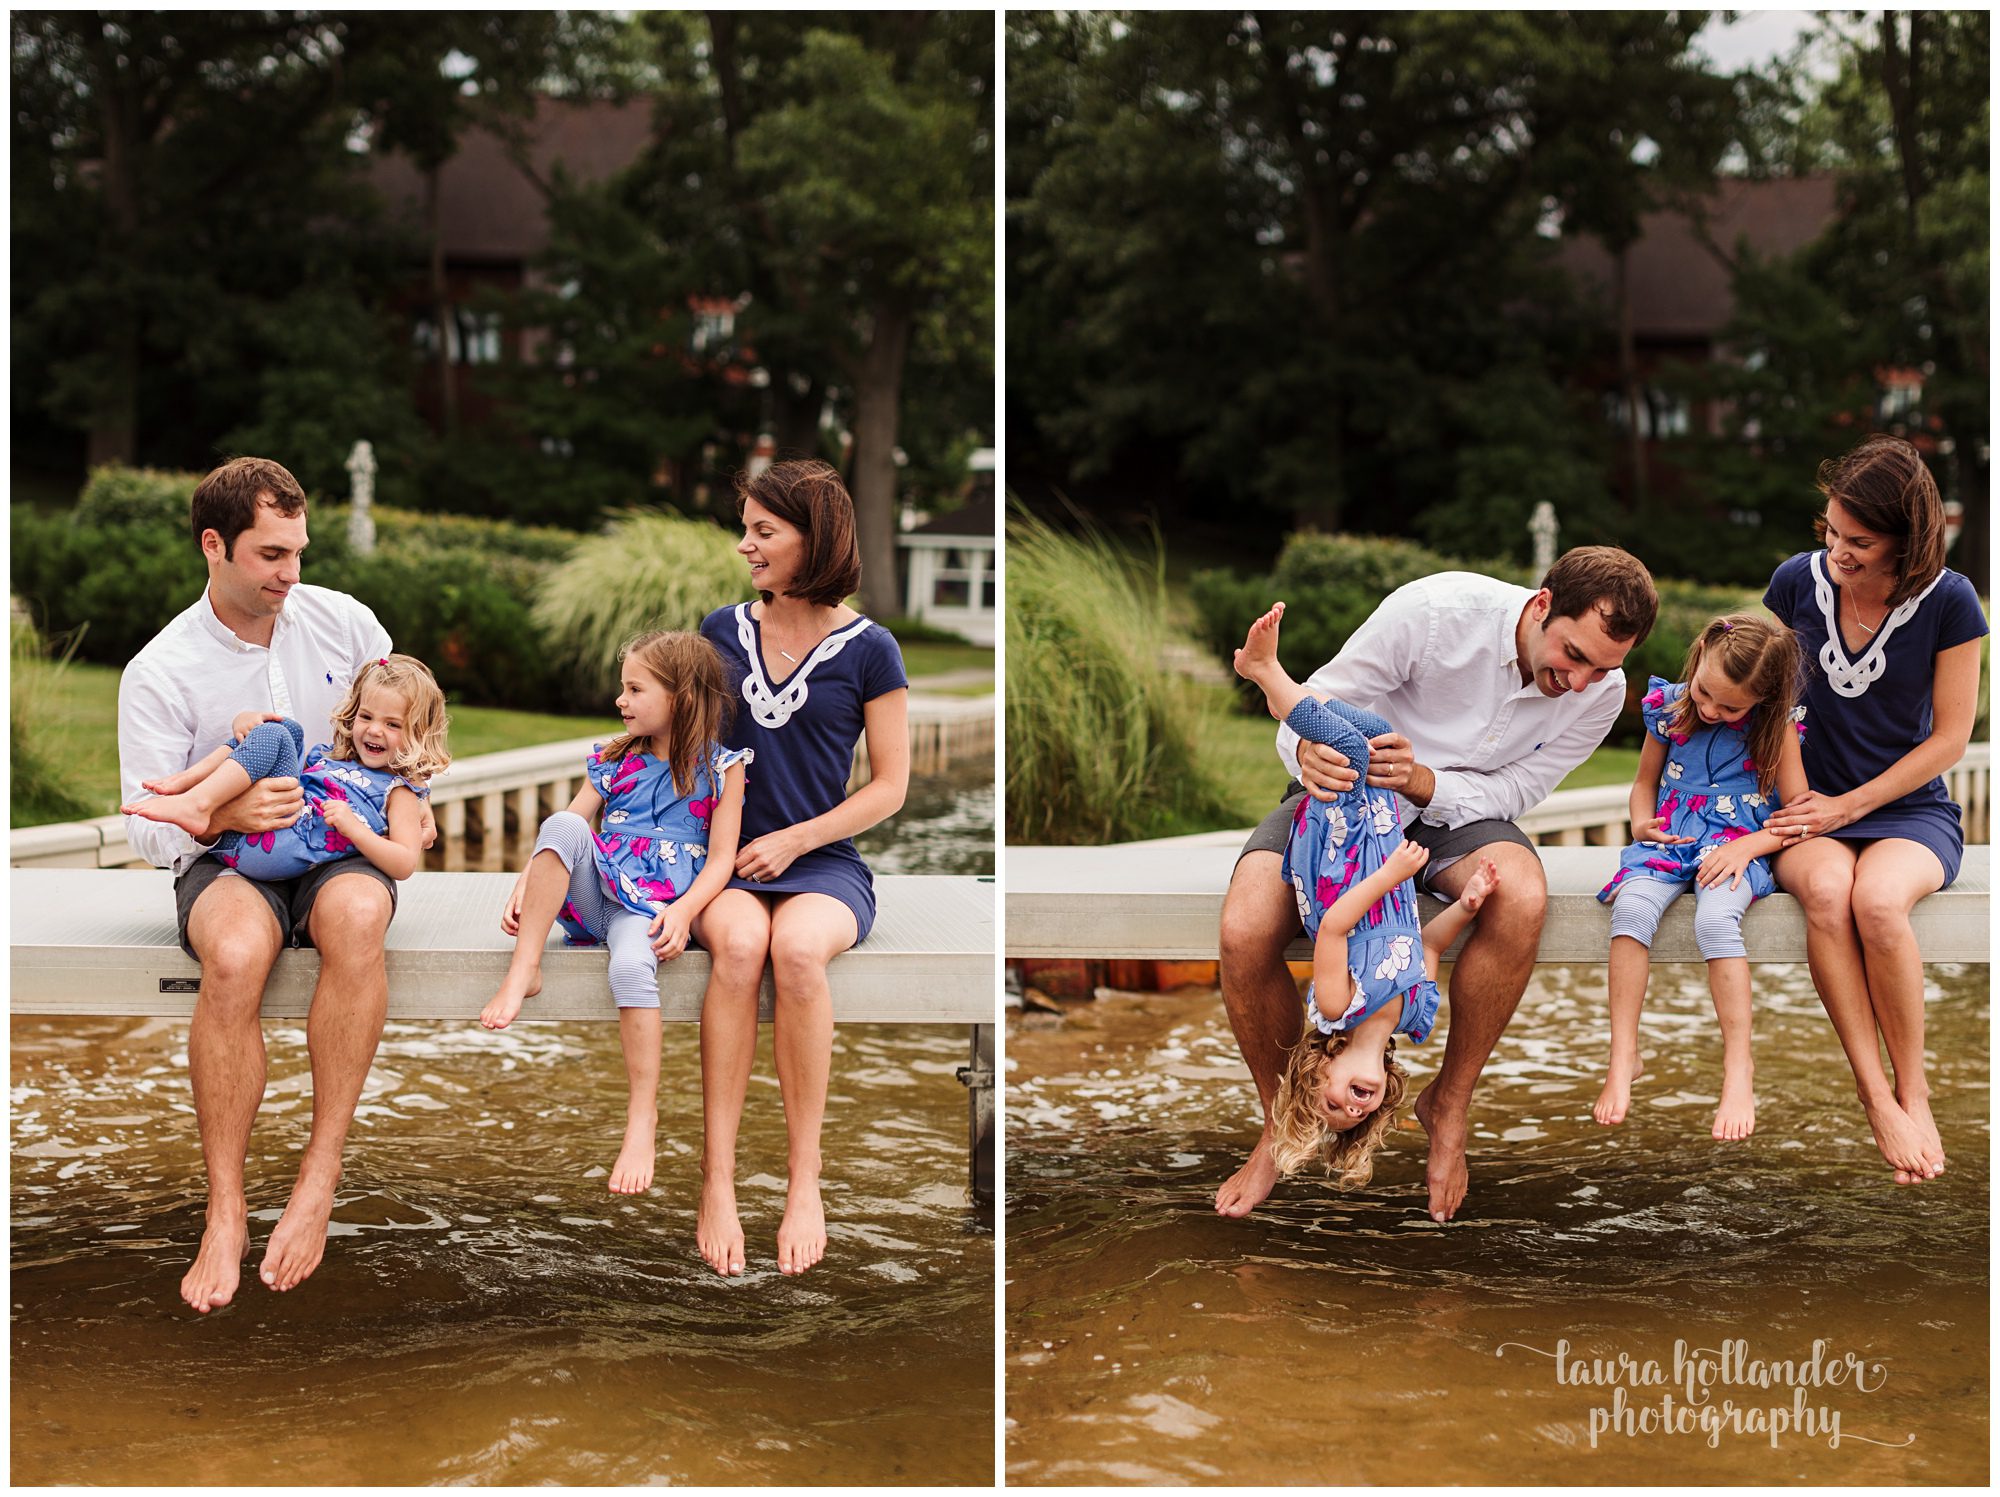 family of four, lake goguac, battle creek michigan lifestyle photography, Laura Hollander Photography, lake portraits